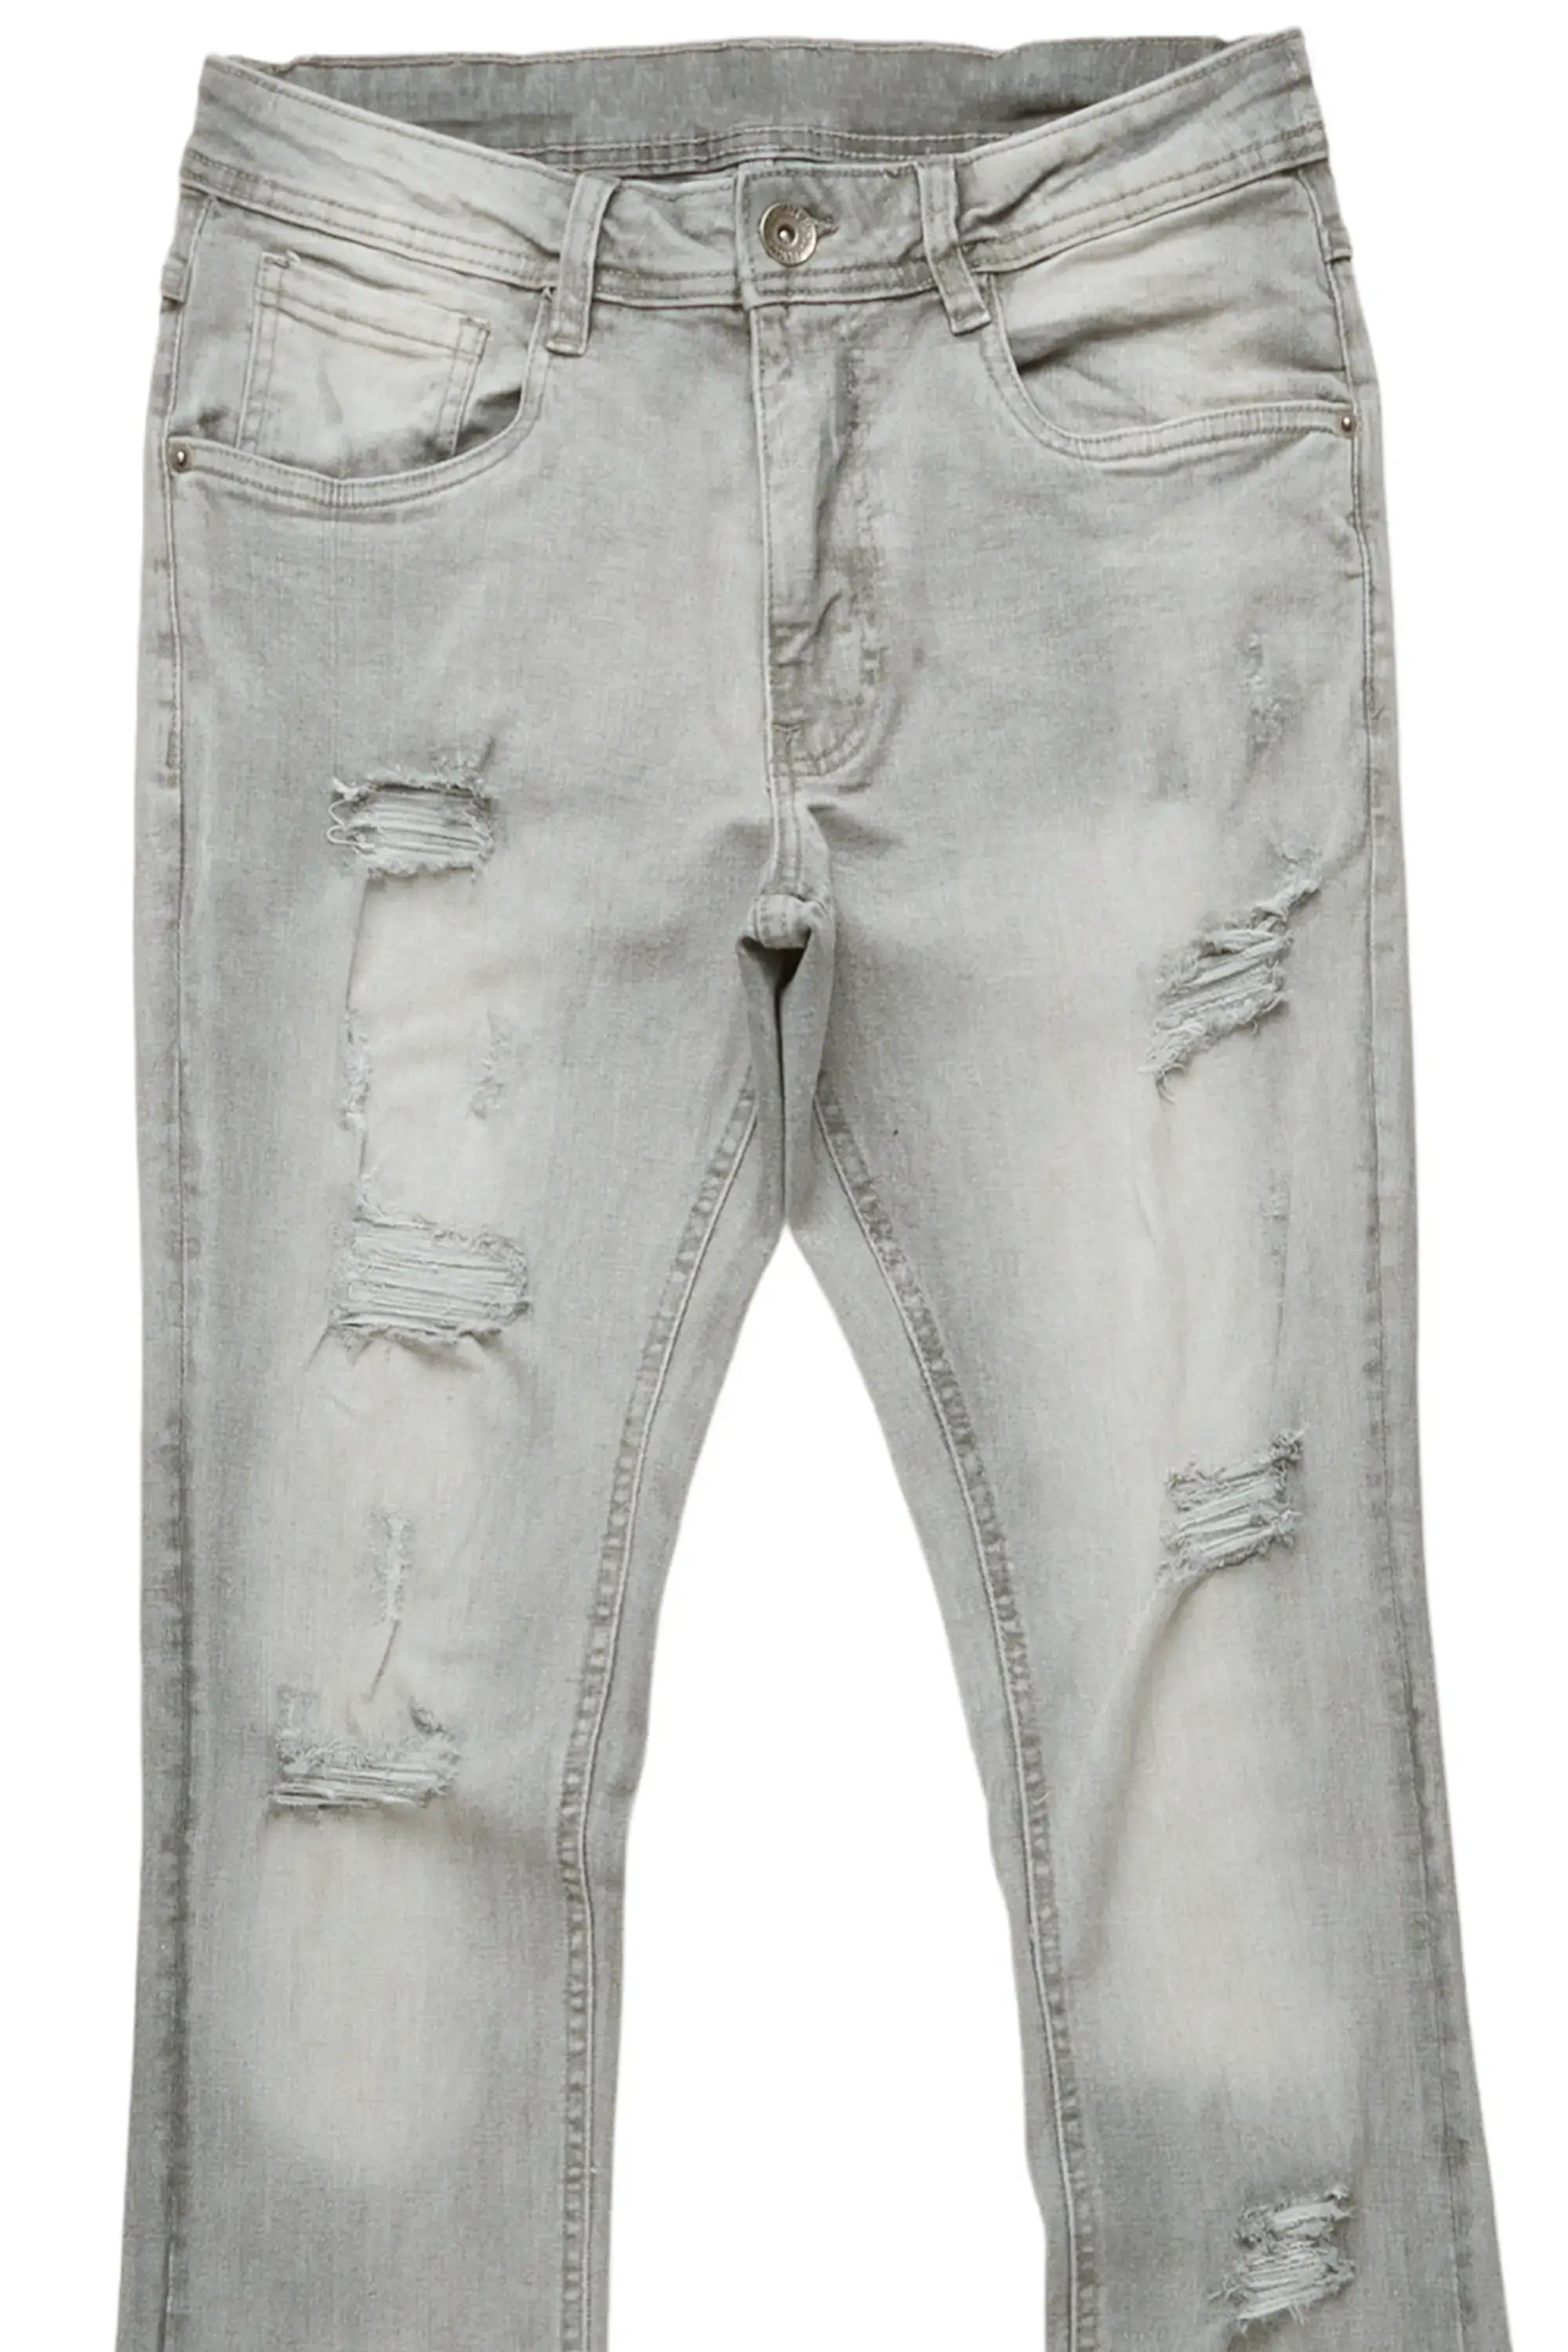 Victorious Men's Distressed Rip and Repair Denim Jeans DL1119 - Gray -  28/32 - Walmart.com